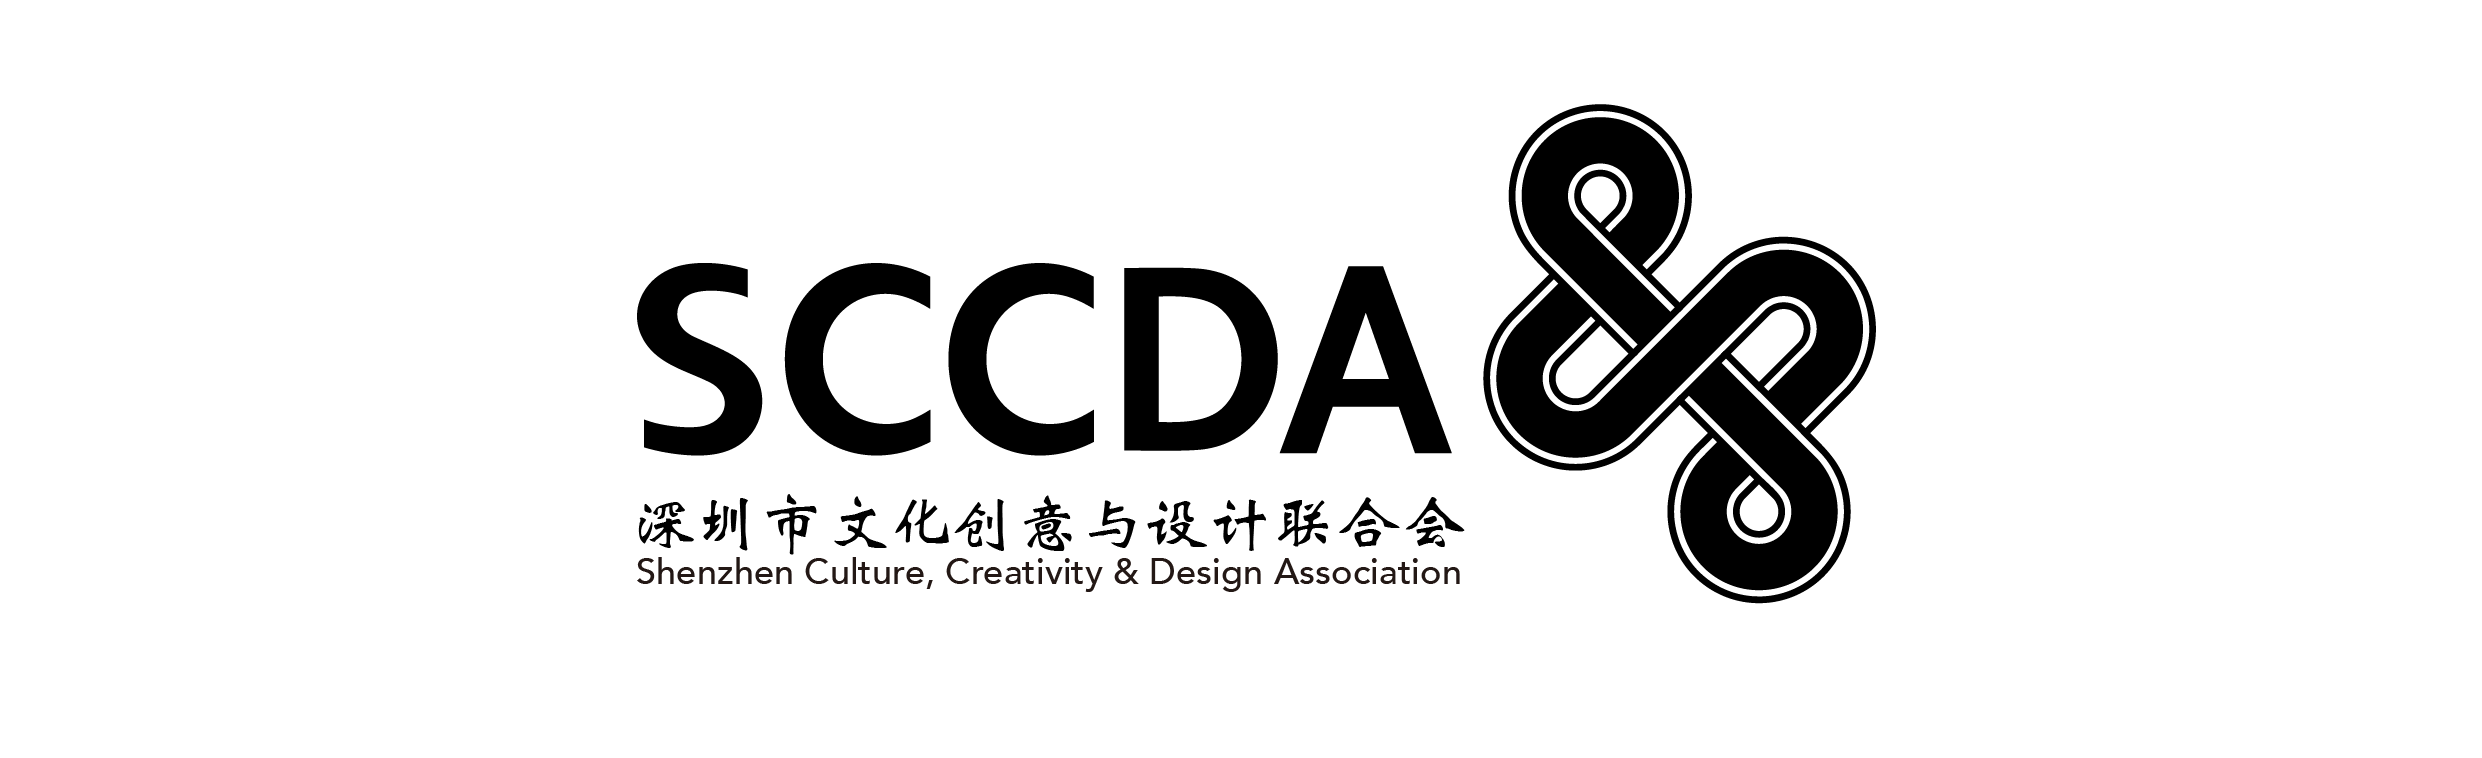 Shenzhen Culture, Creativity & Design Association